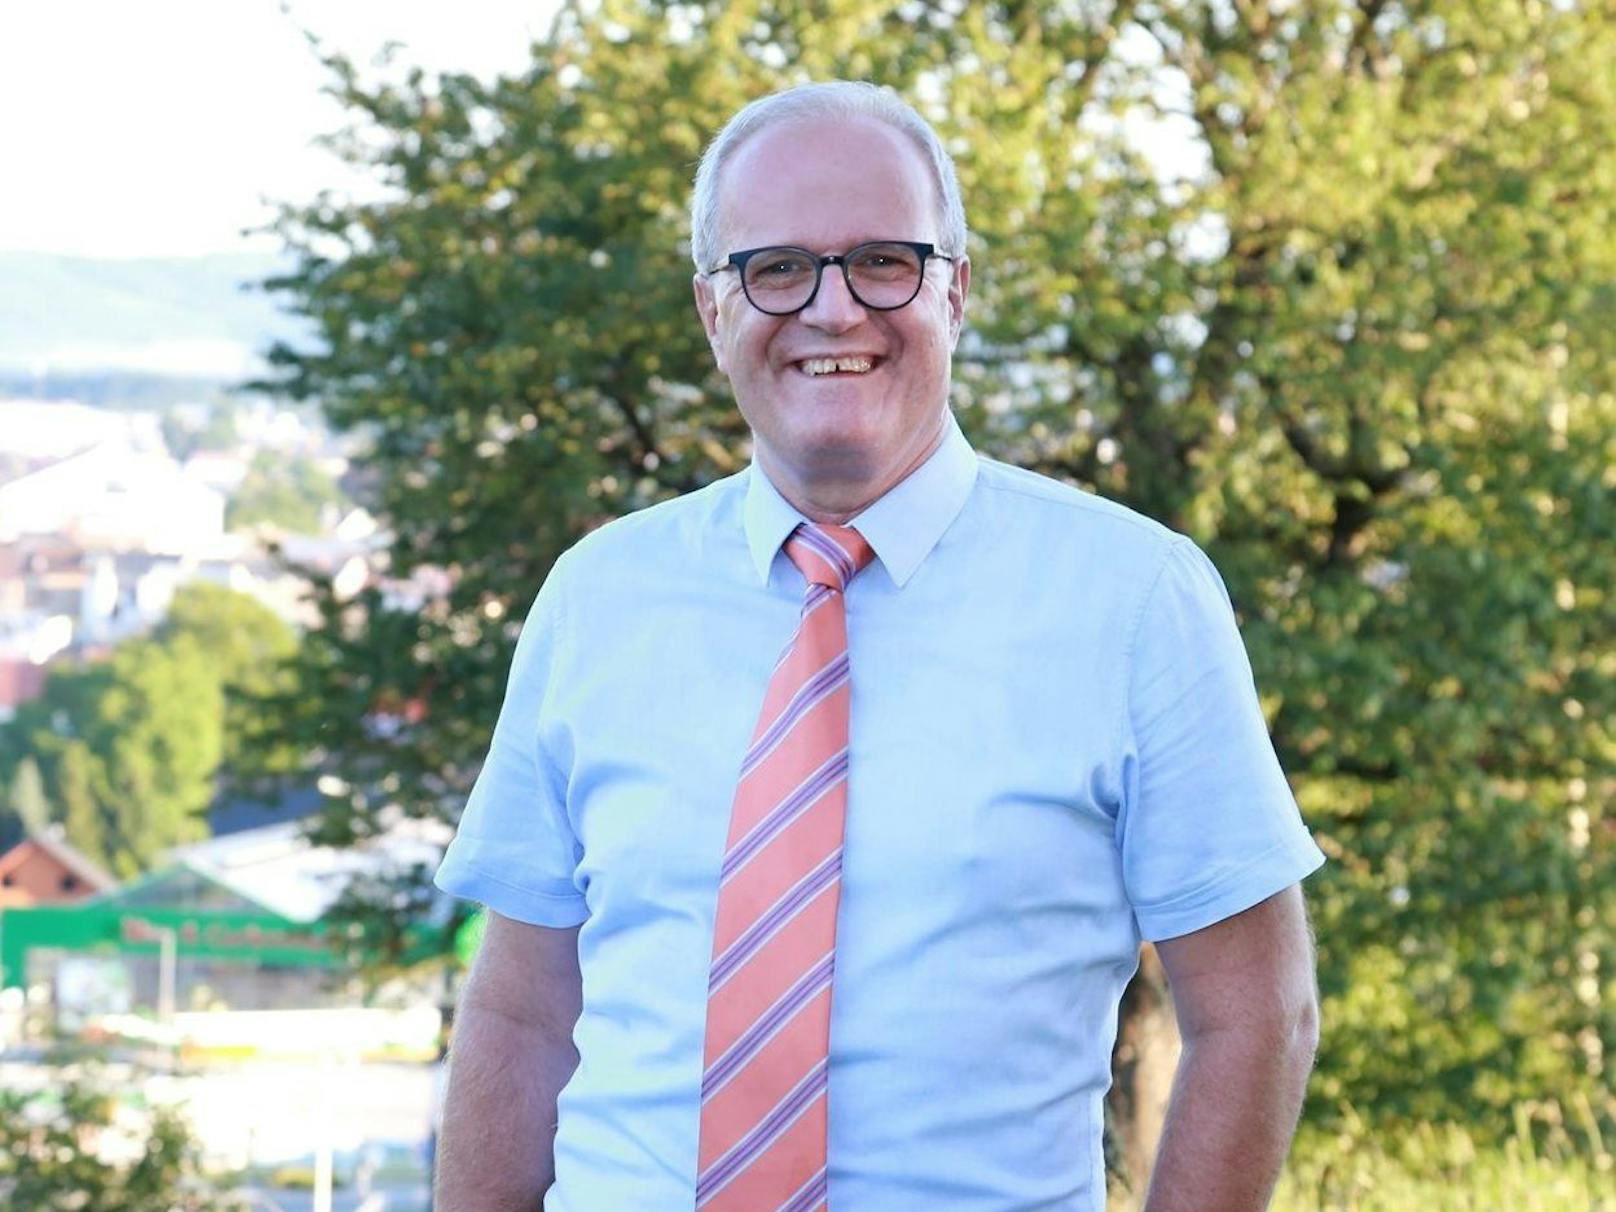 Der Freistädter Bürgermeister Christian Gratzl (SPÖ) will im Herbst Parkbuchten errichten.